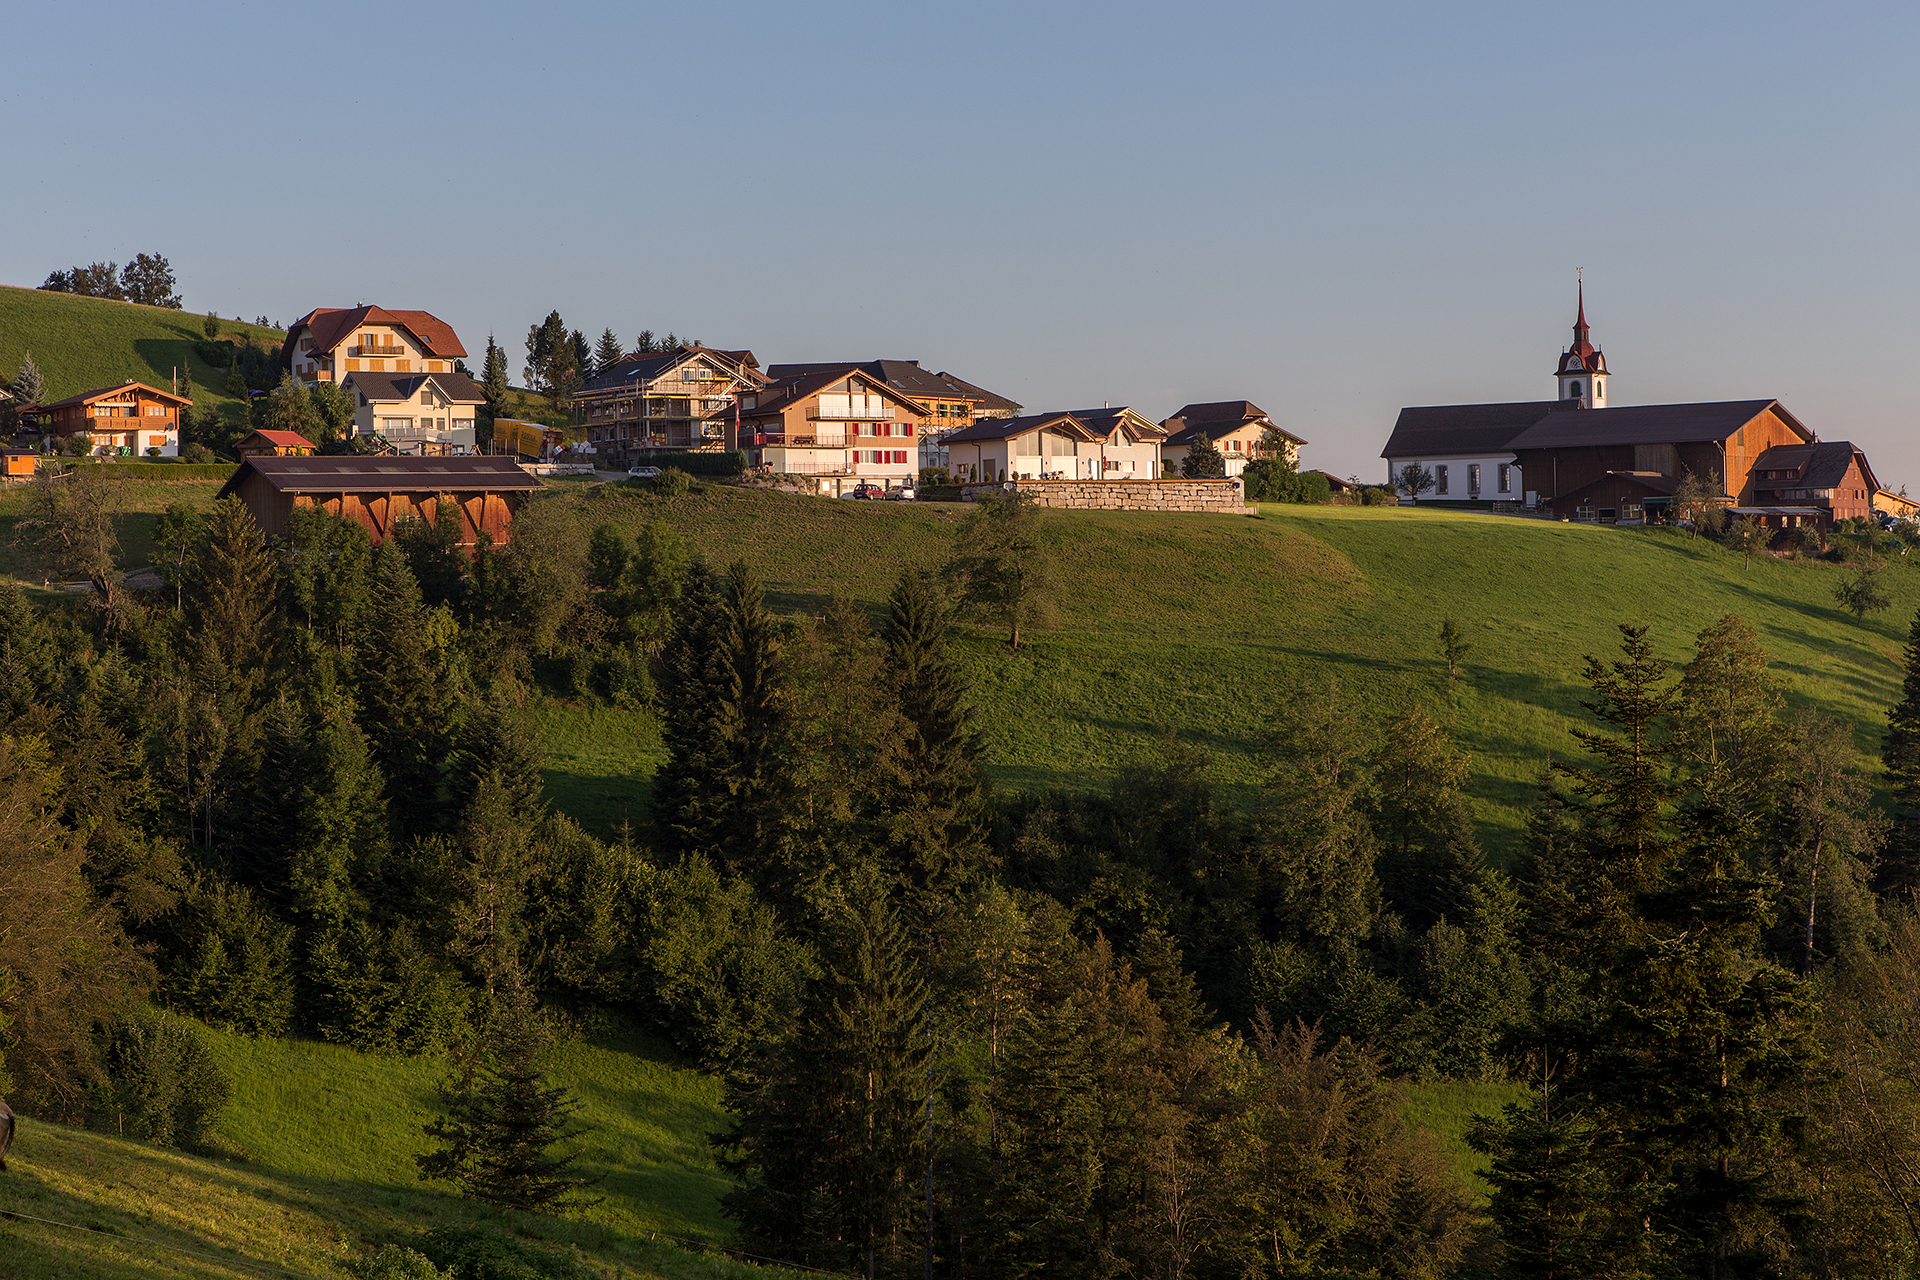 Деревня центр. Menznau Швейцария. Тринген. Dorf am main. D. Herdemerten / Wikimedia Commons.